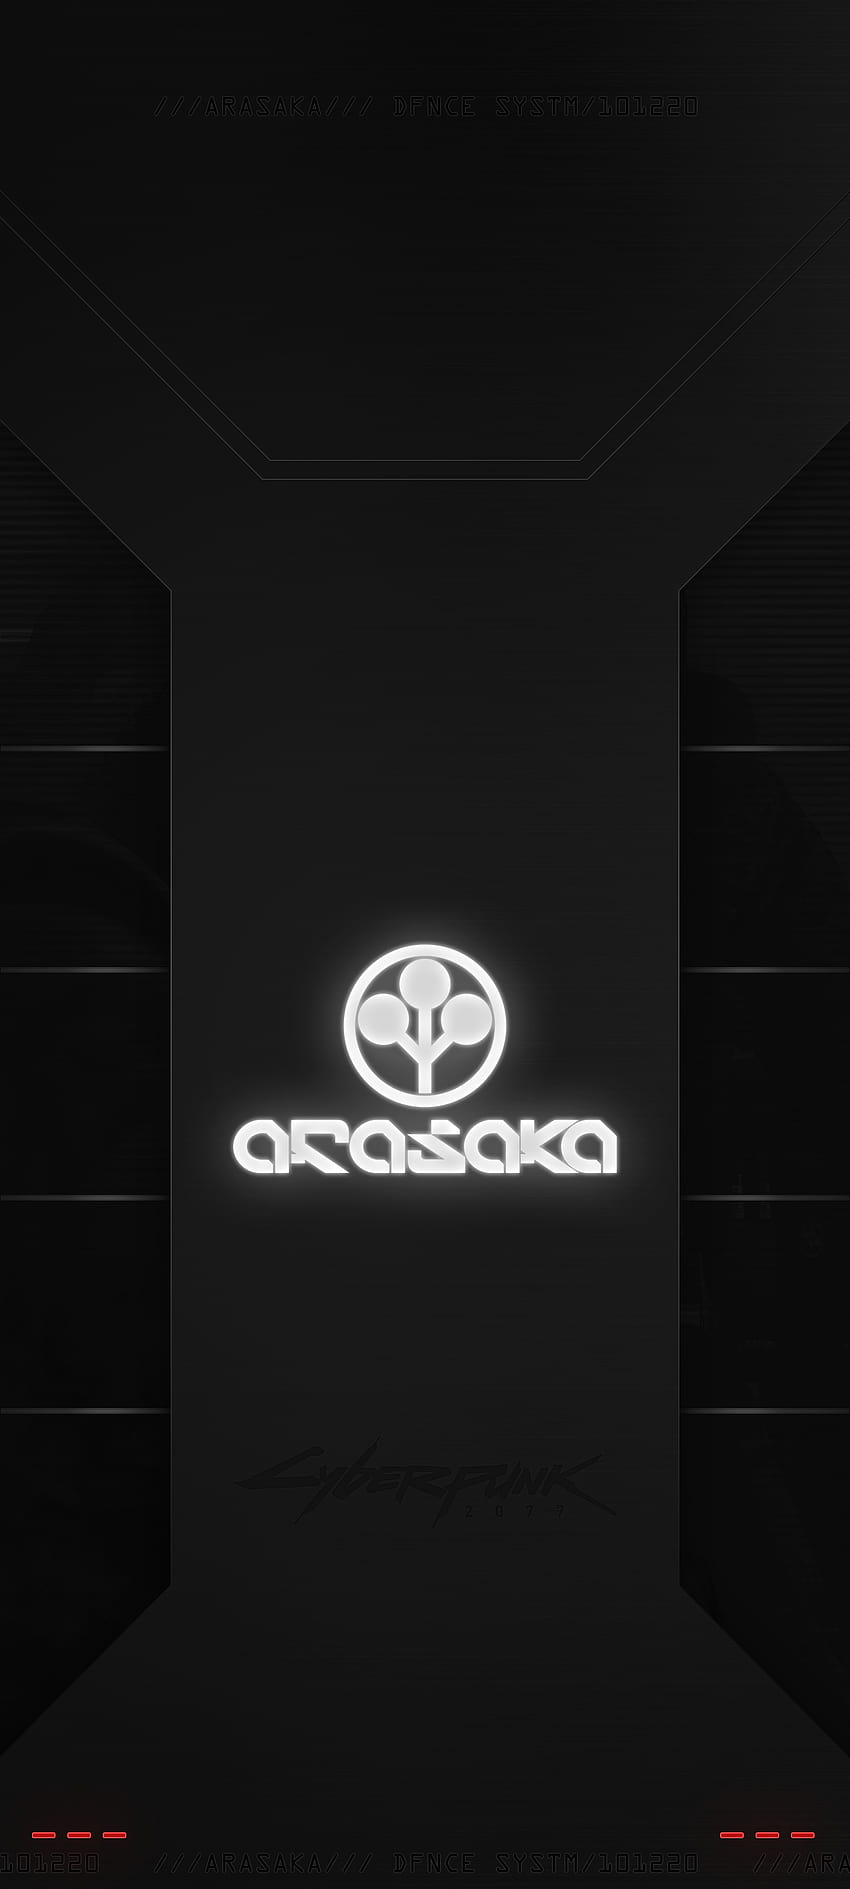 Custom Arasaka and lock screen for Samsung S2 HD phone wallpaper